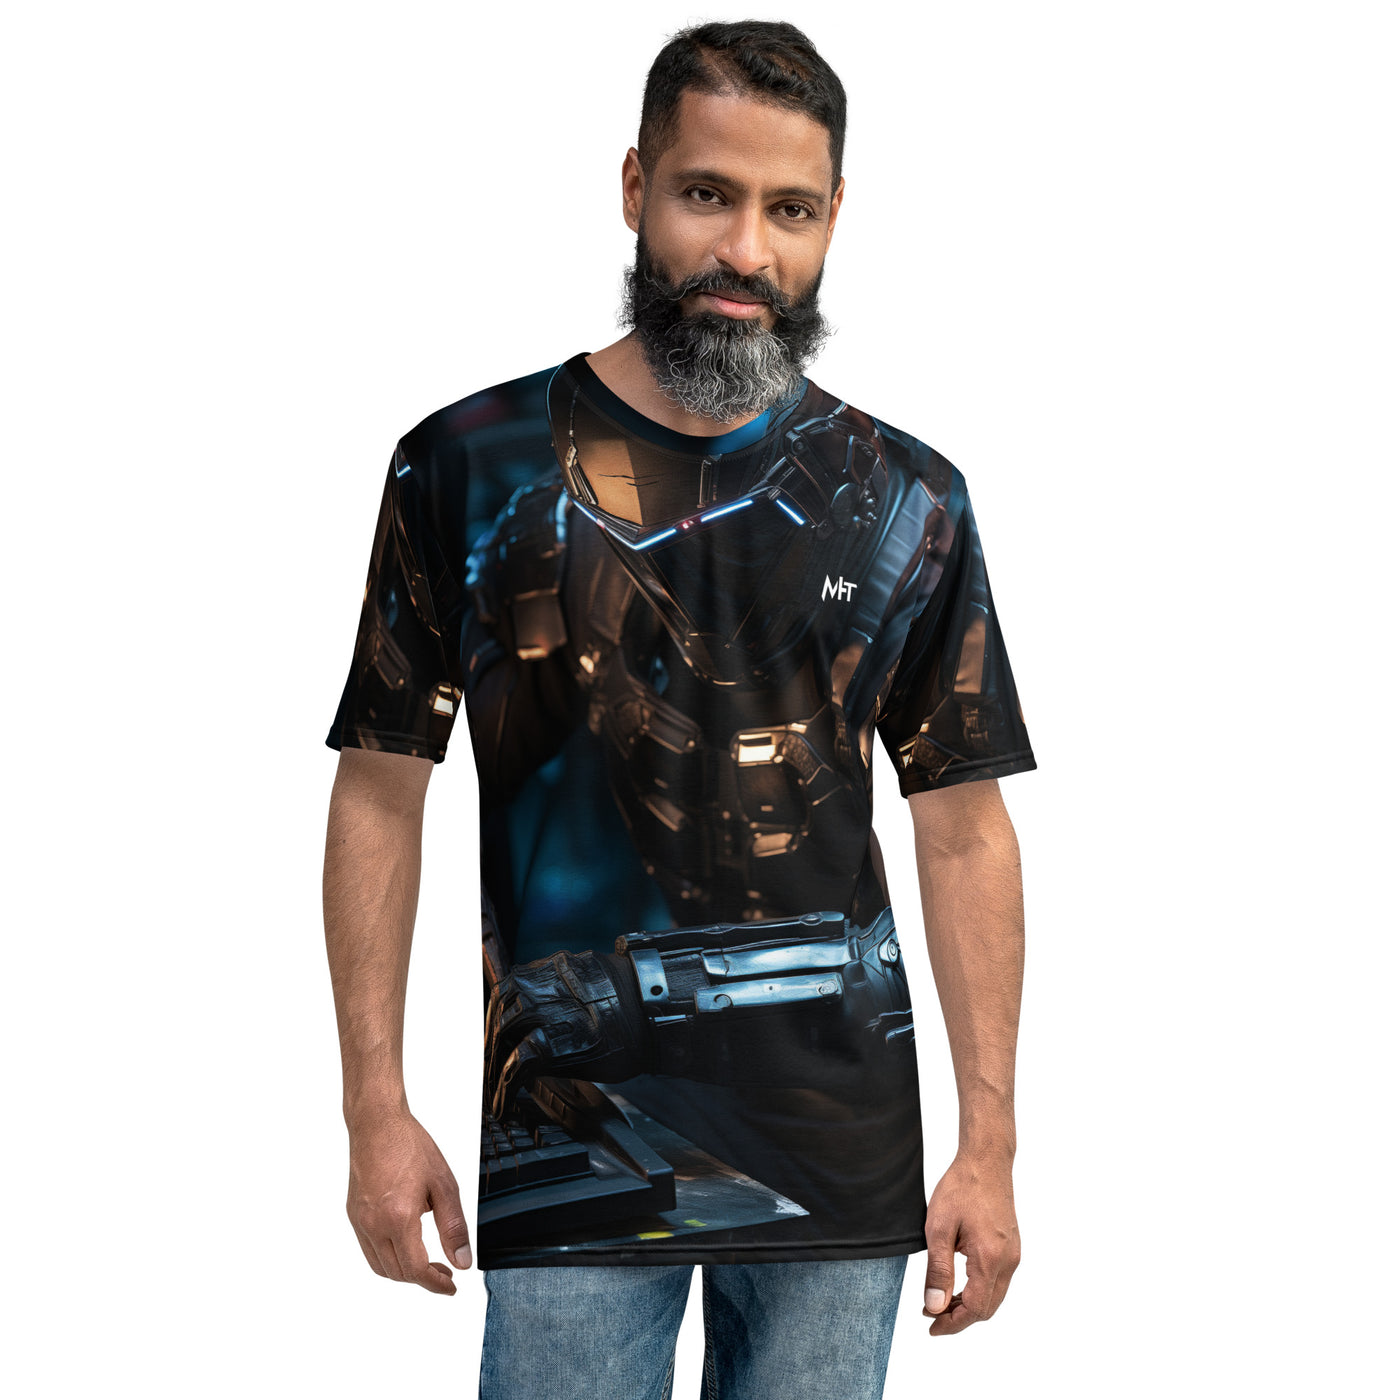 CyberArms Warrior v19 - Men's t-shirt